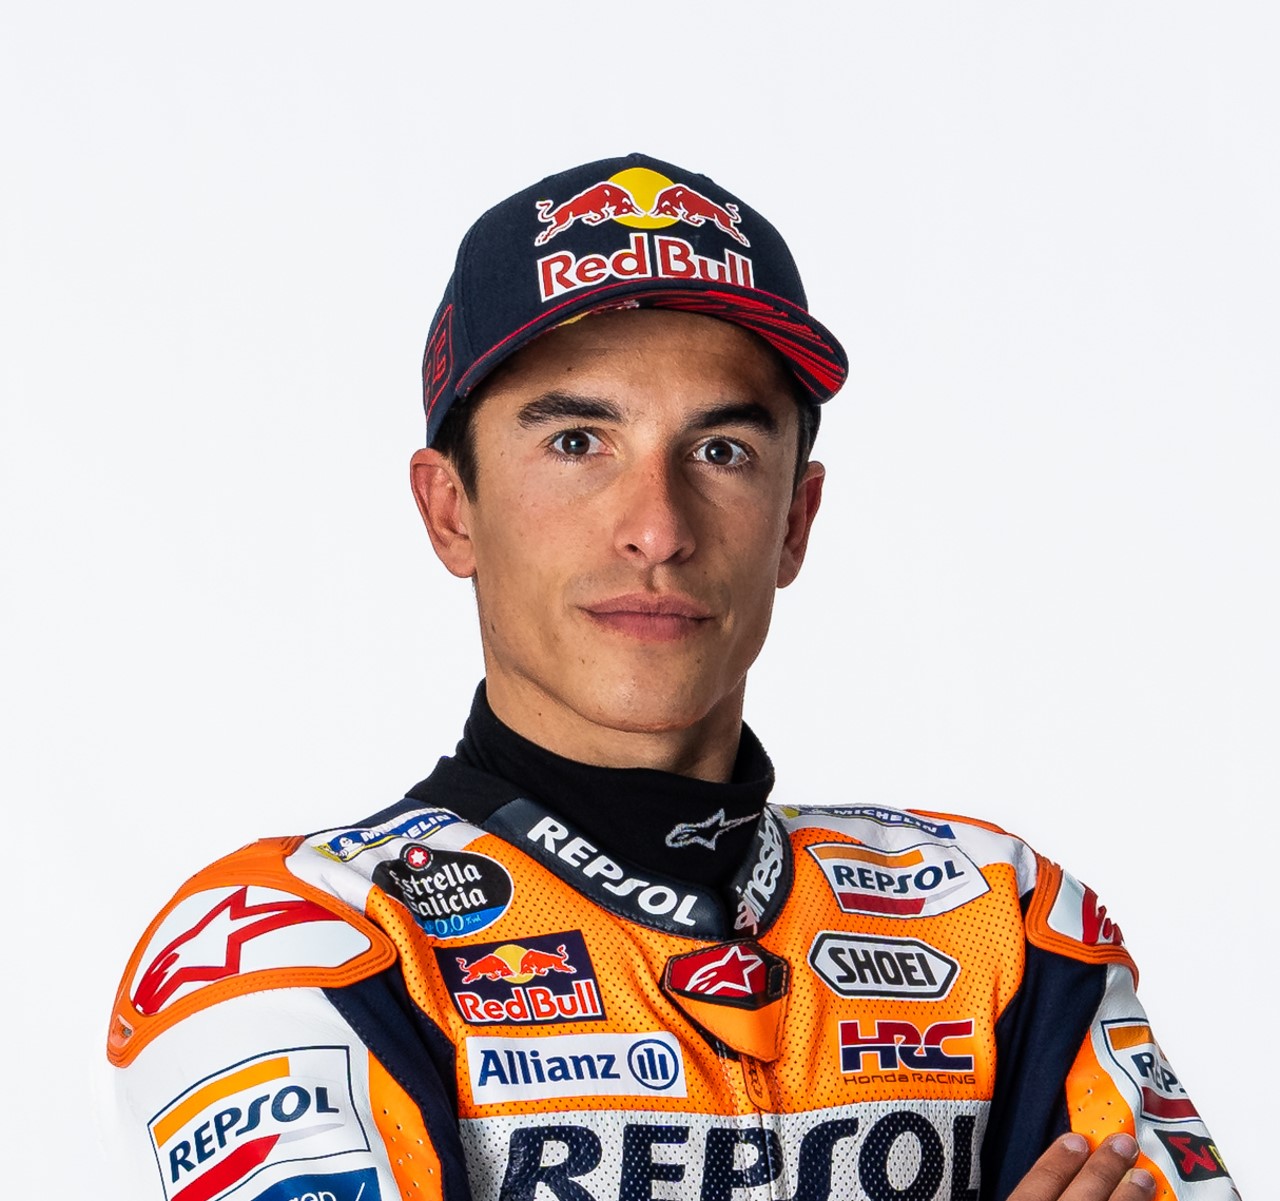 MotoGP: It’s Official – Marquez signs to ride Gresini Ducati